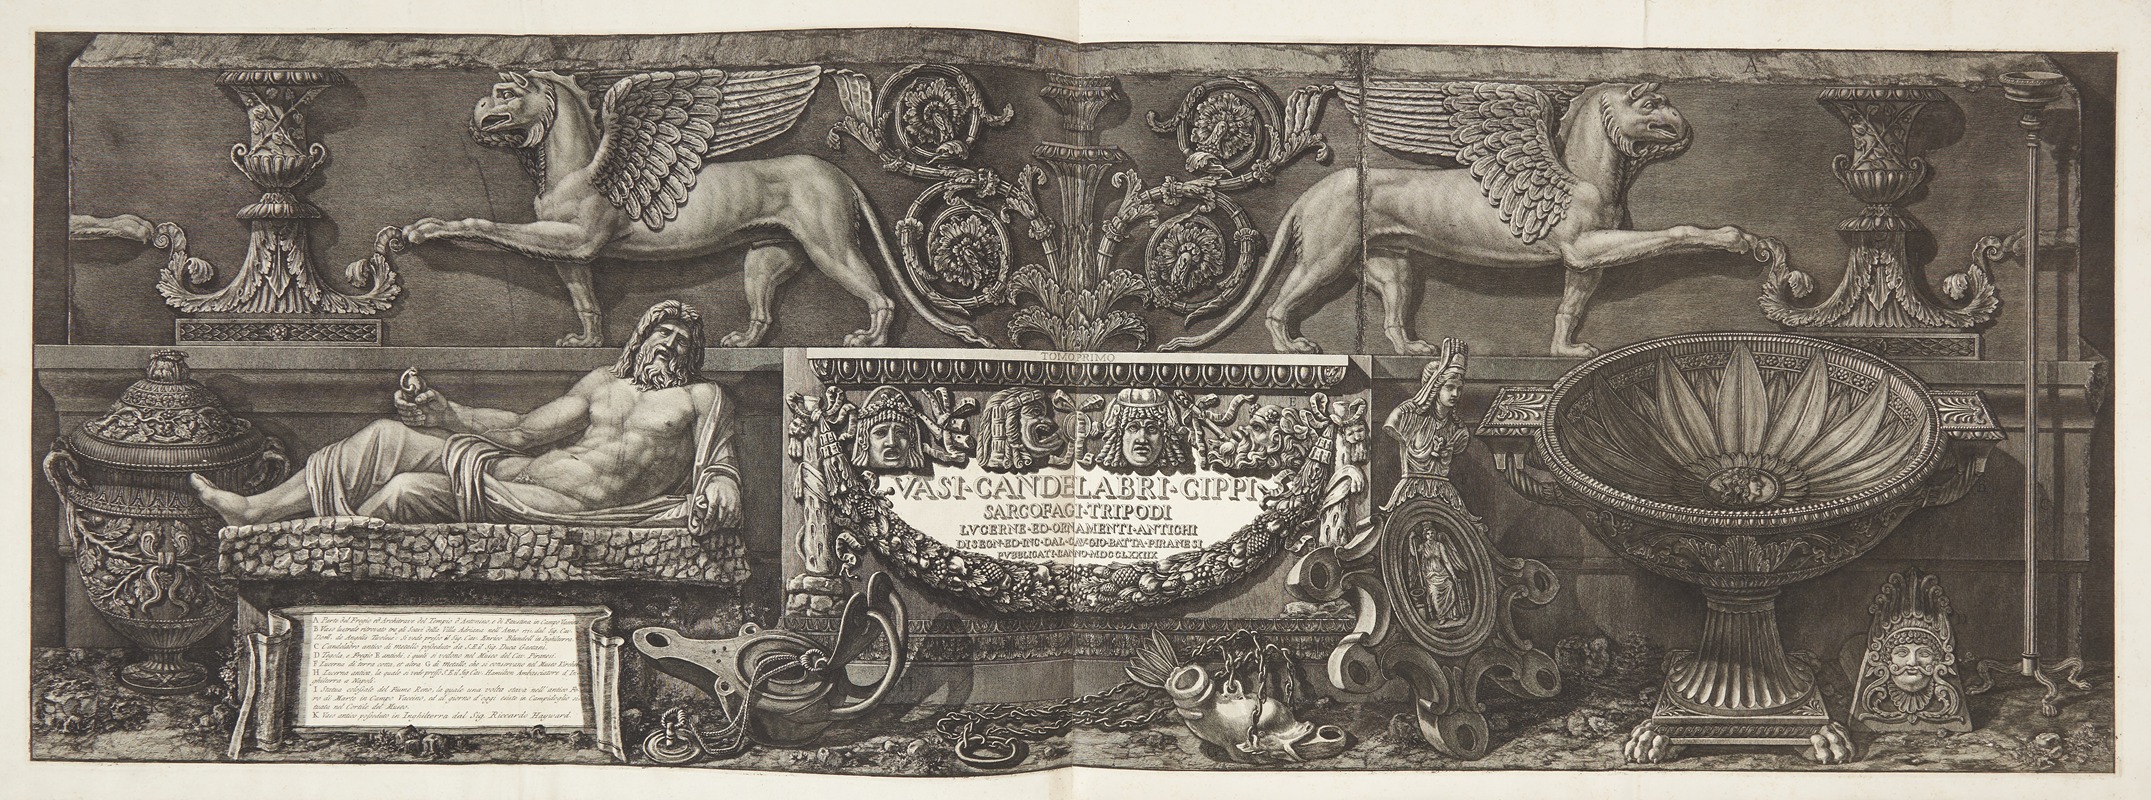 Giovanni Battista Piranesi - Vasi, candelabri, cippi, sarcophagi , titelblad til serien første bind